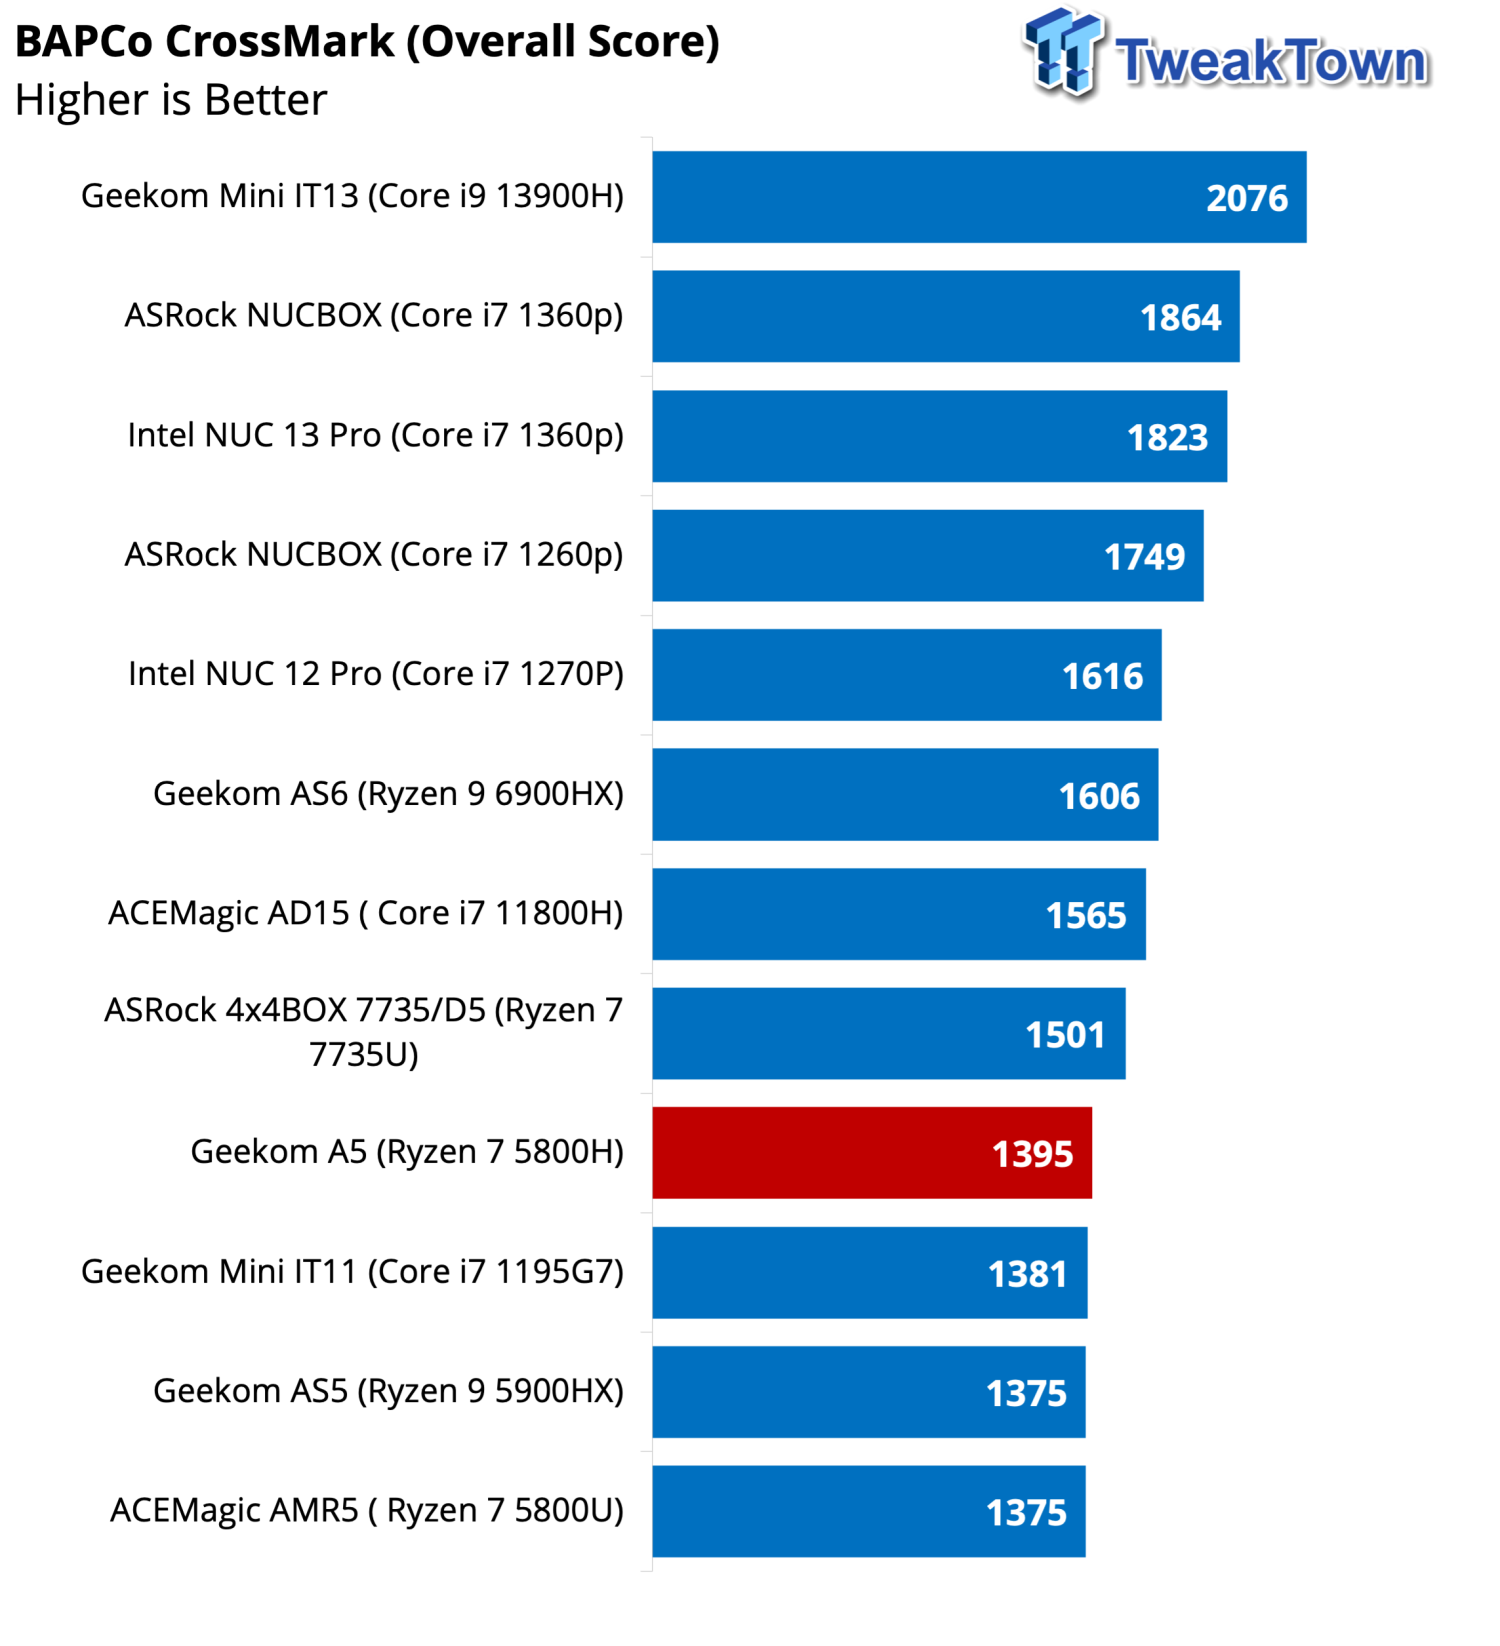 GEEKOM A5 AMD Ryzen 7 5800H Mini PC Review